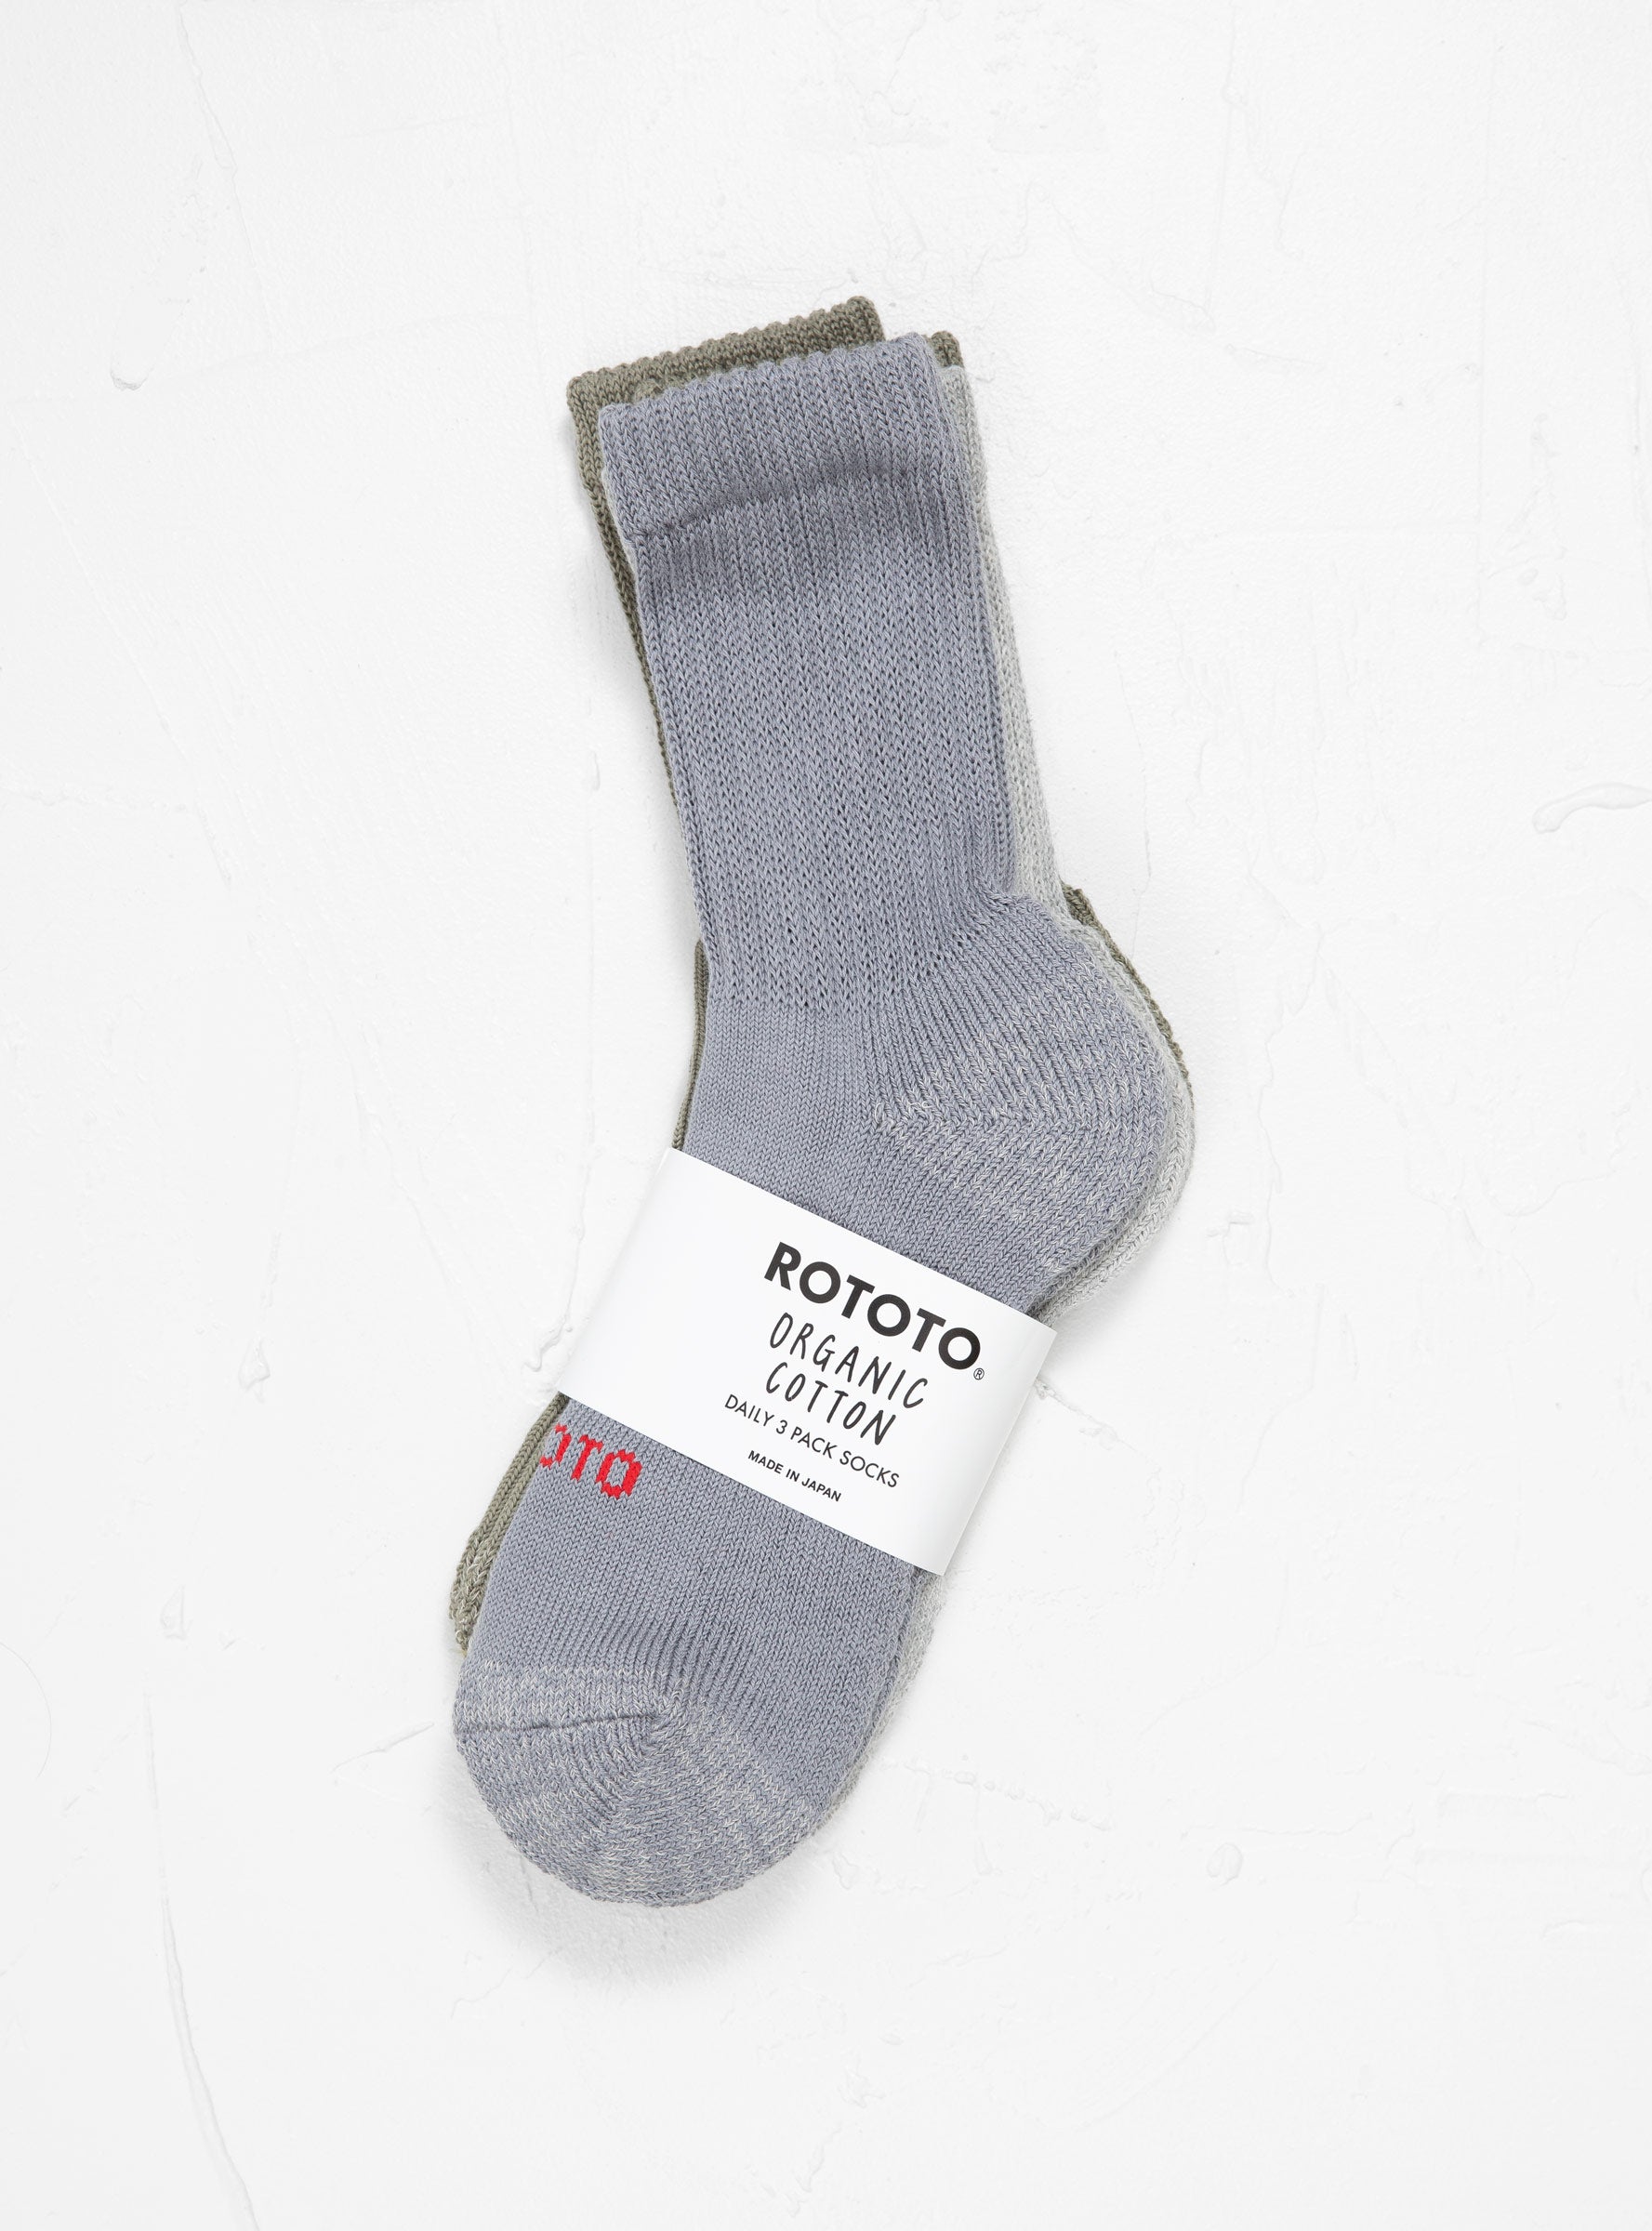 Rototo ROTOTO Organic Daily 3 Pack Crew Socks Multi - Size: ONE SIZE